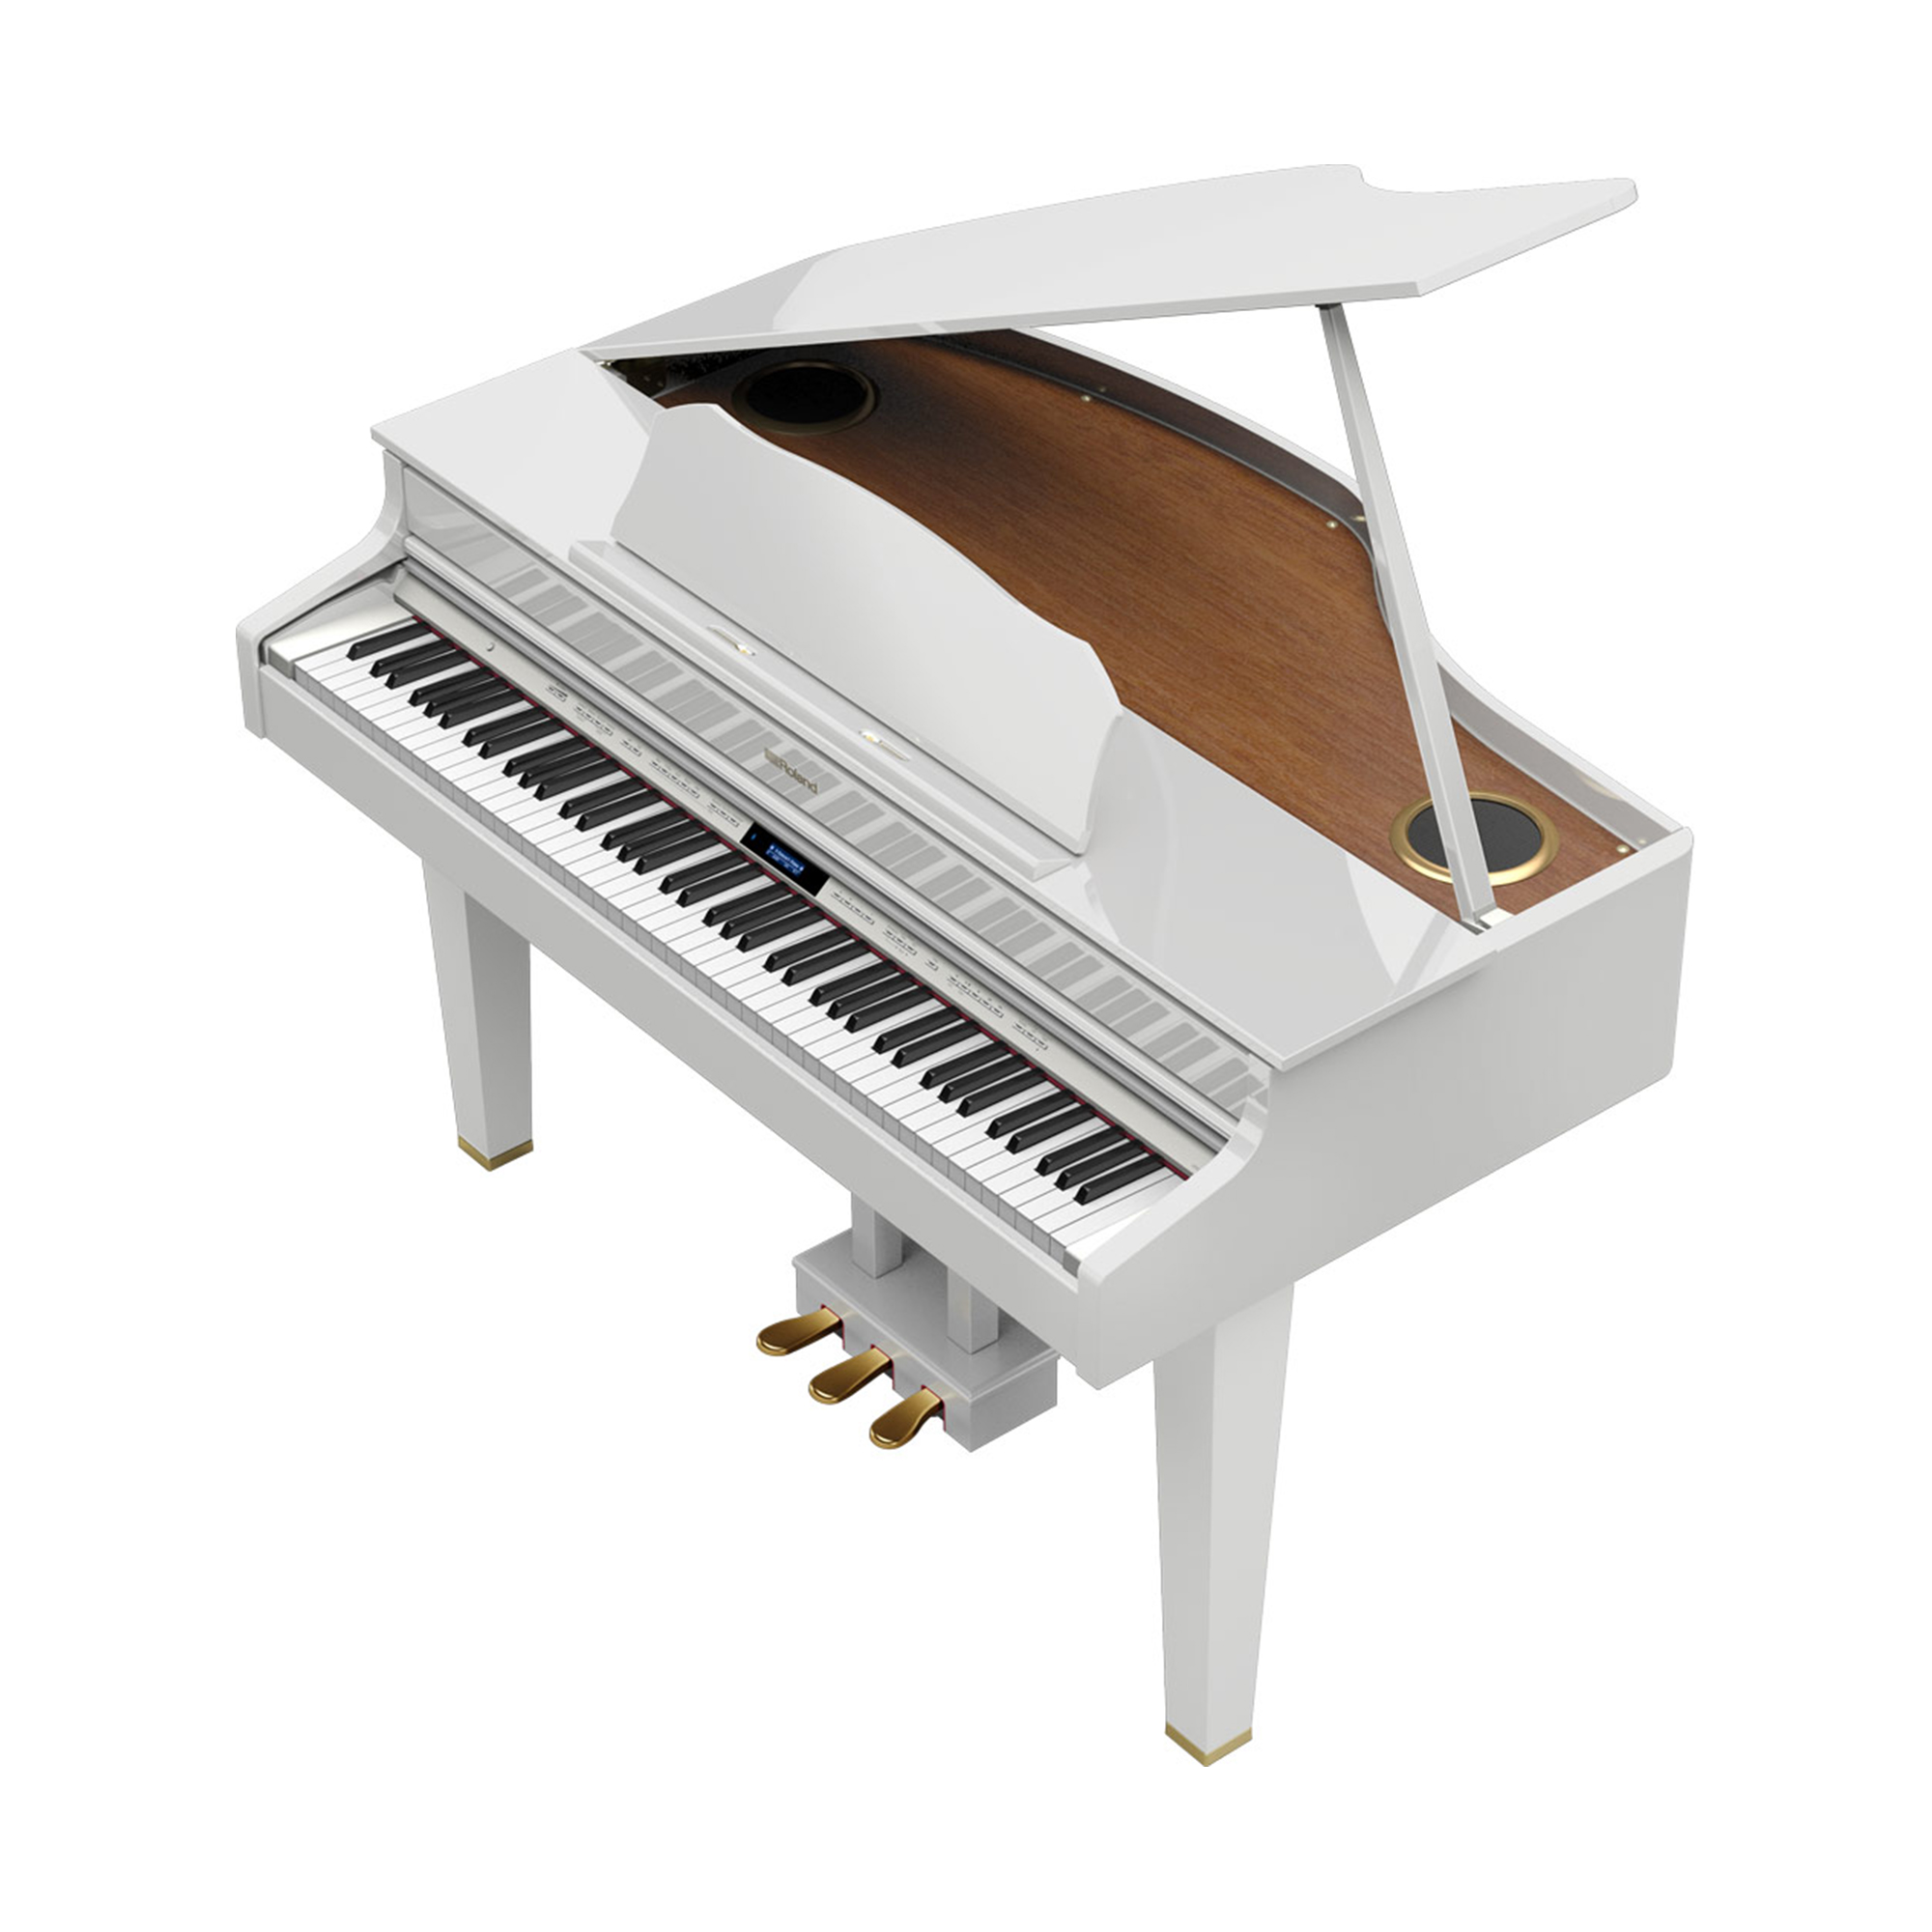 their make it flat Amazon Jungle Roland GP607 Digital Baby Grand Piano | TMW